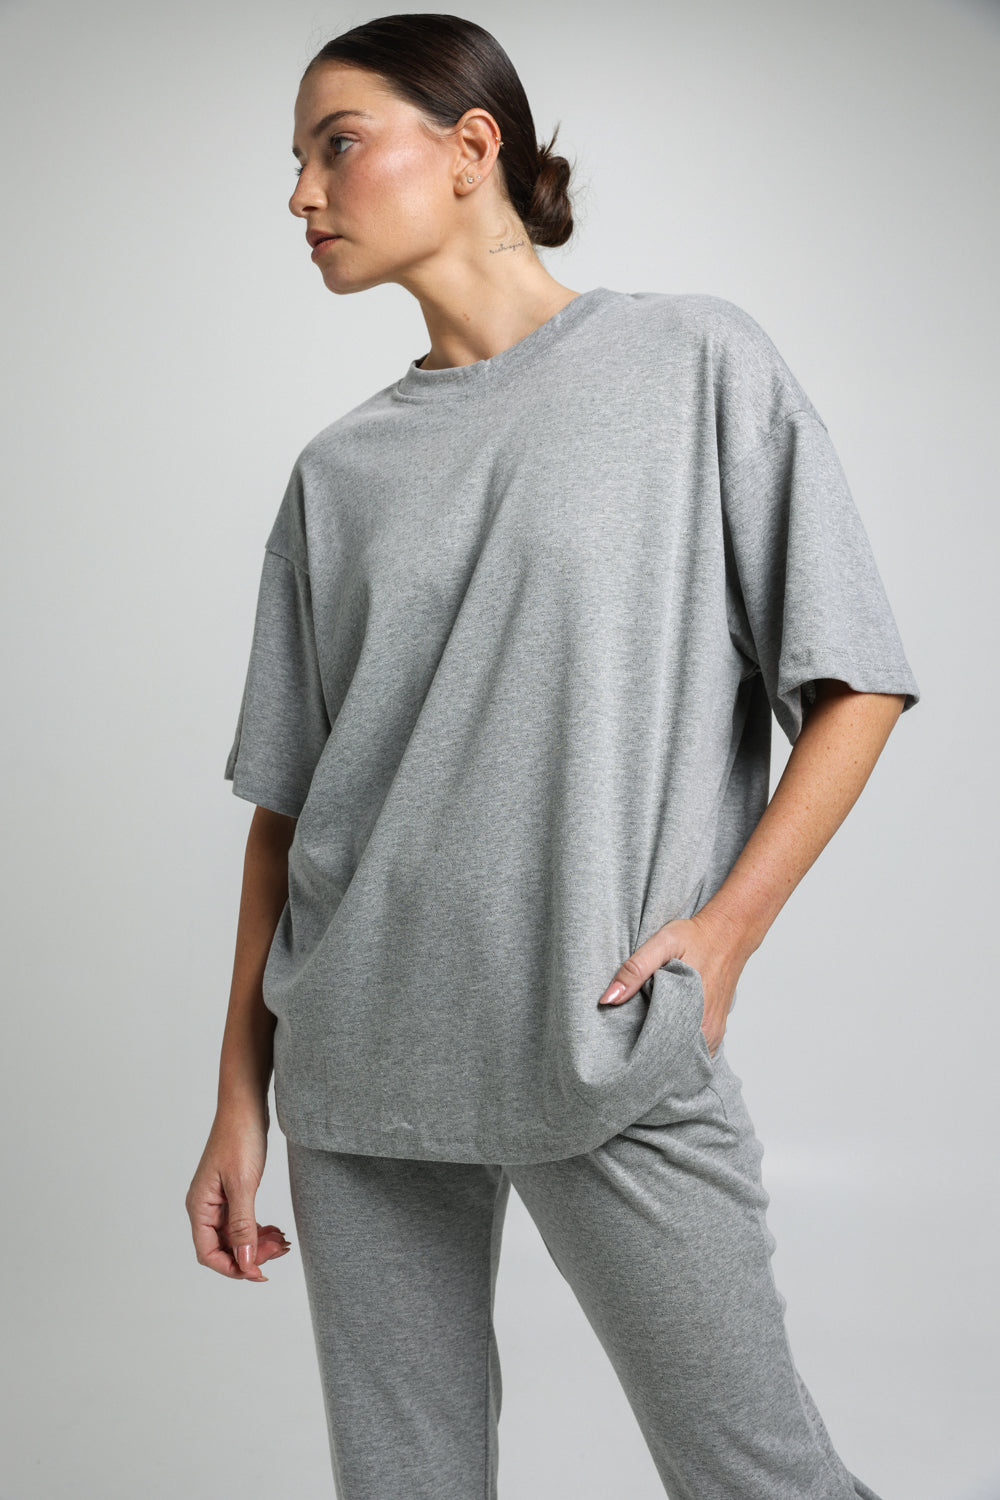 Om Grey T-Shirt